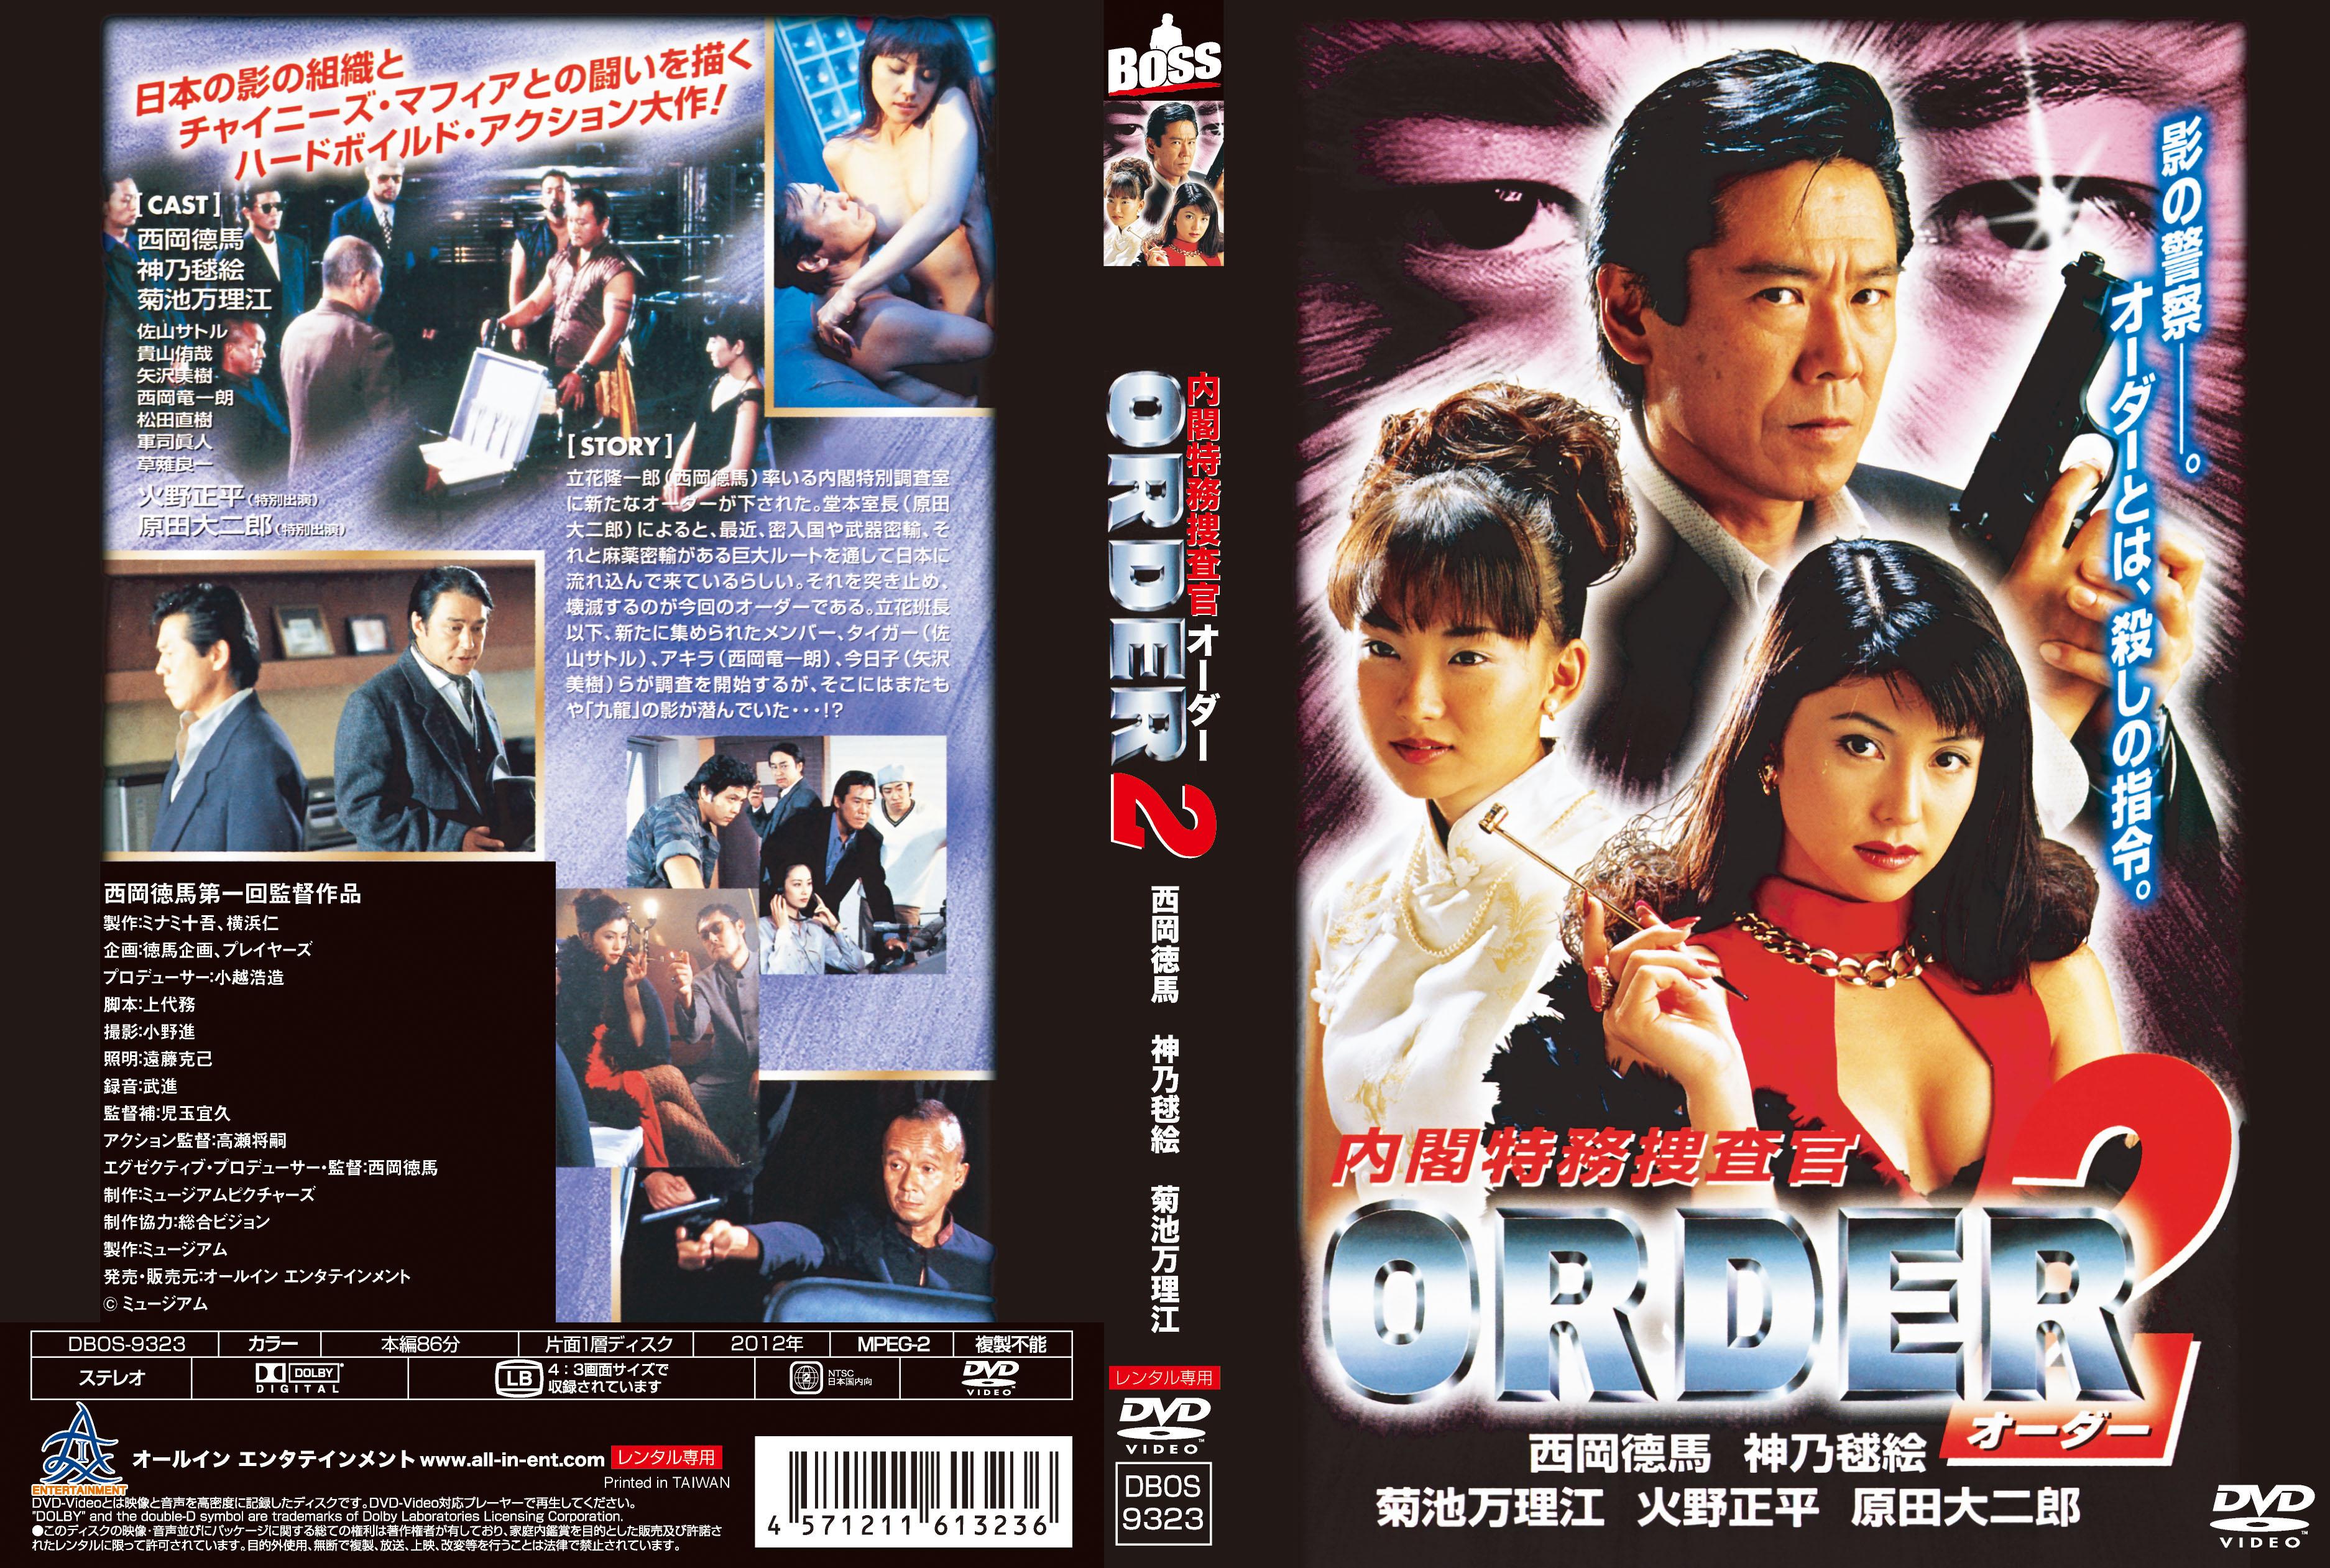 DVD 内閣特務捜査官 ORDER 2 神乃毬絵 菊池万理江 非レンタル品 - 日本映画